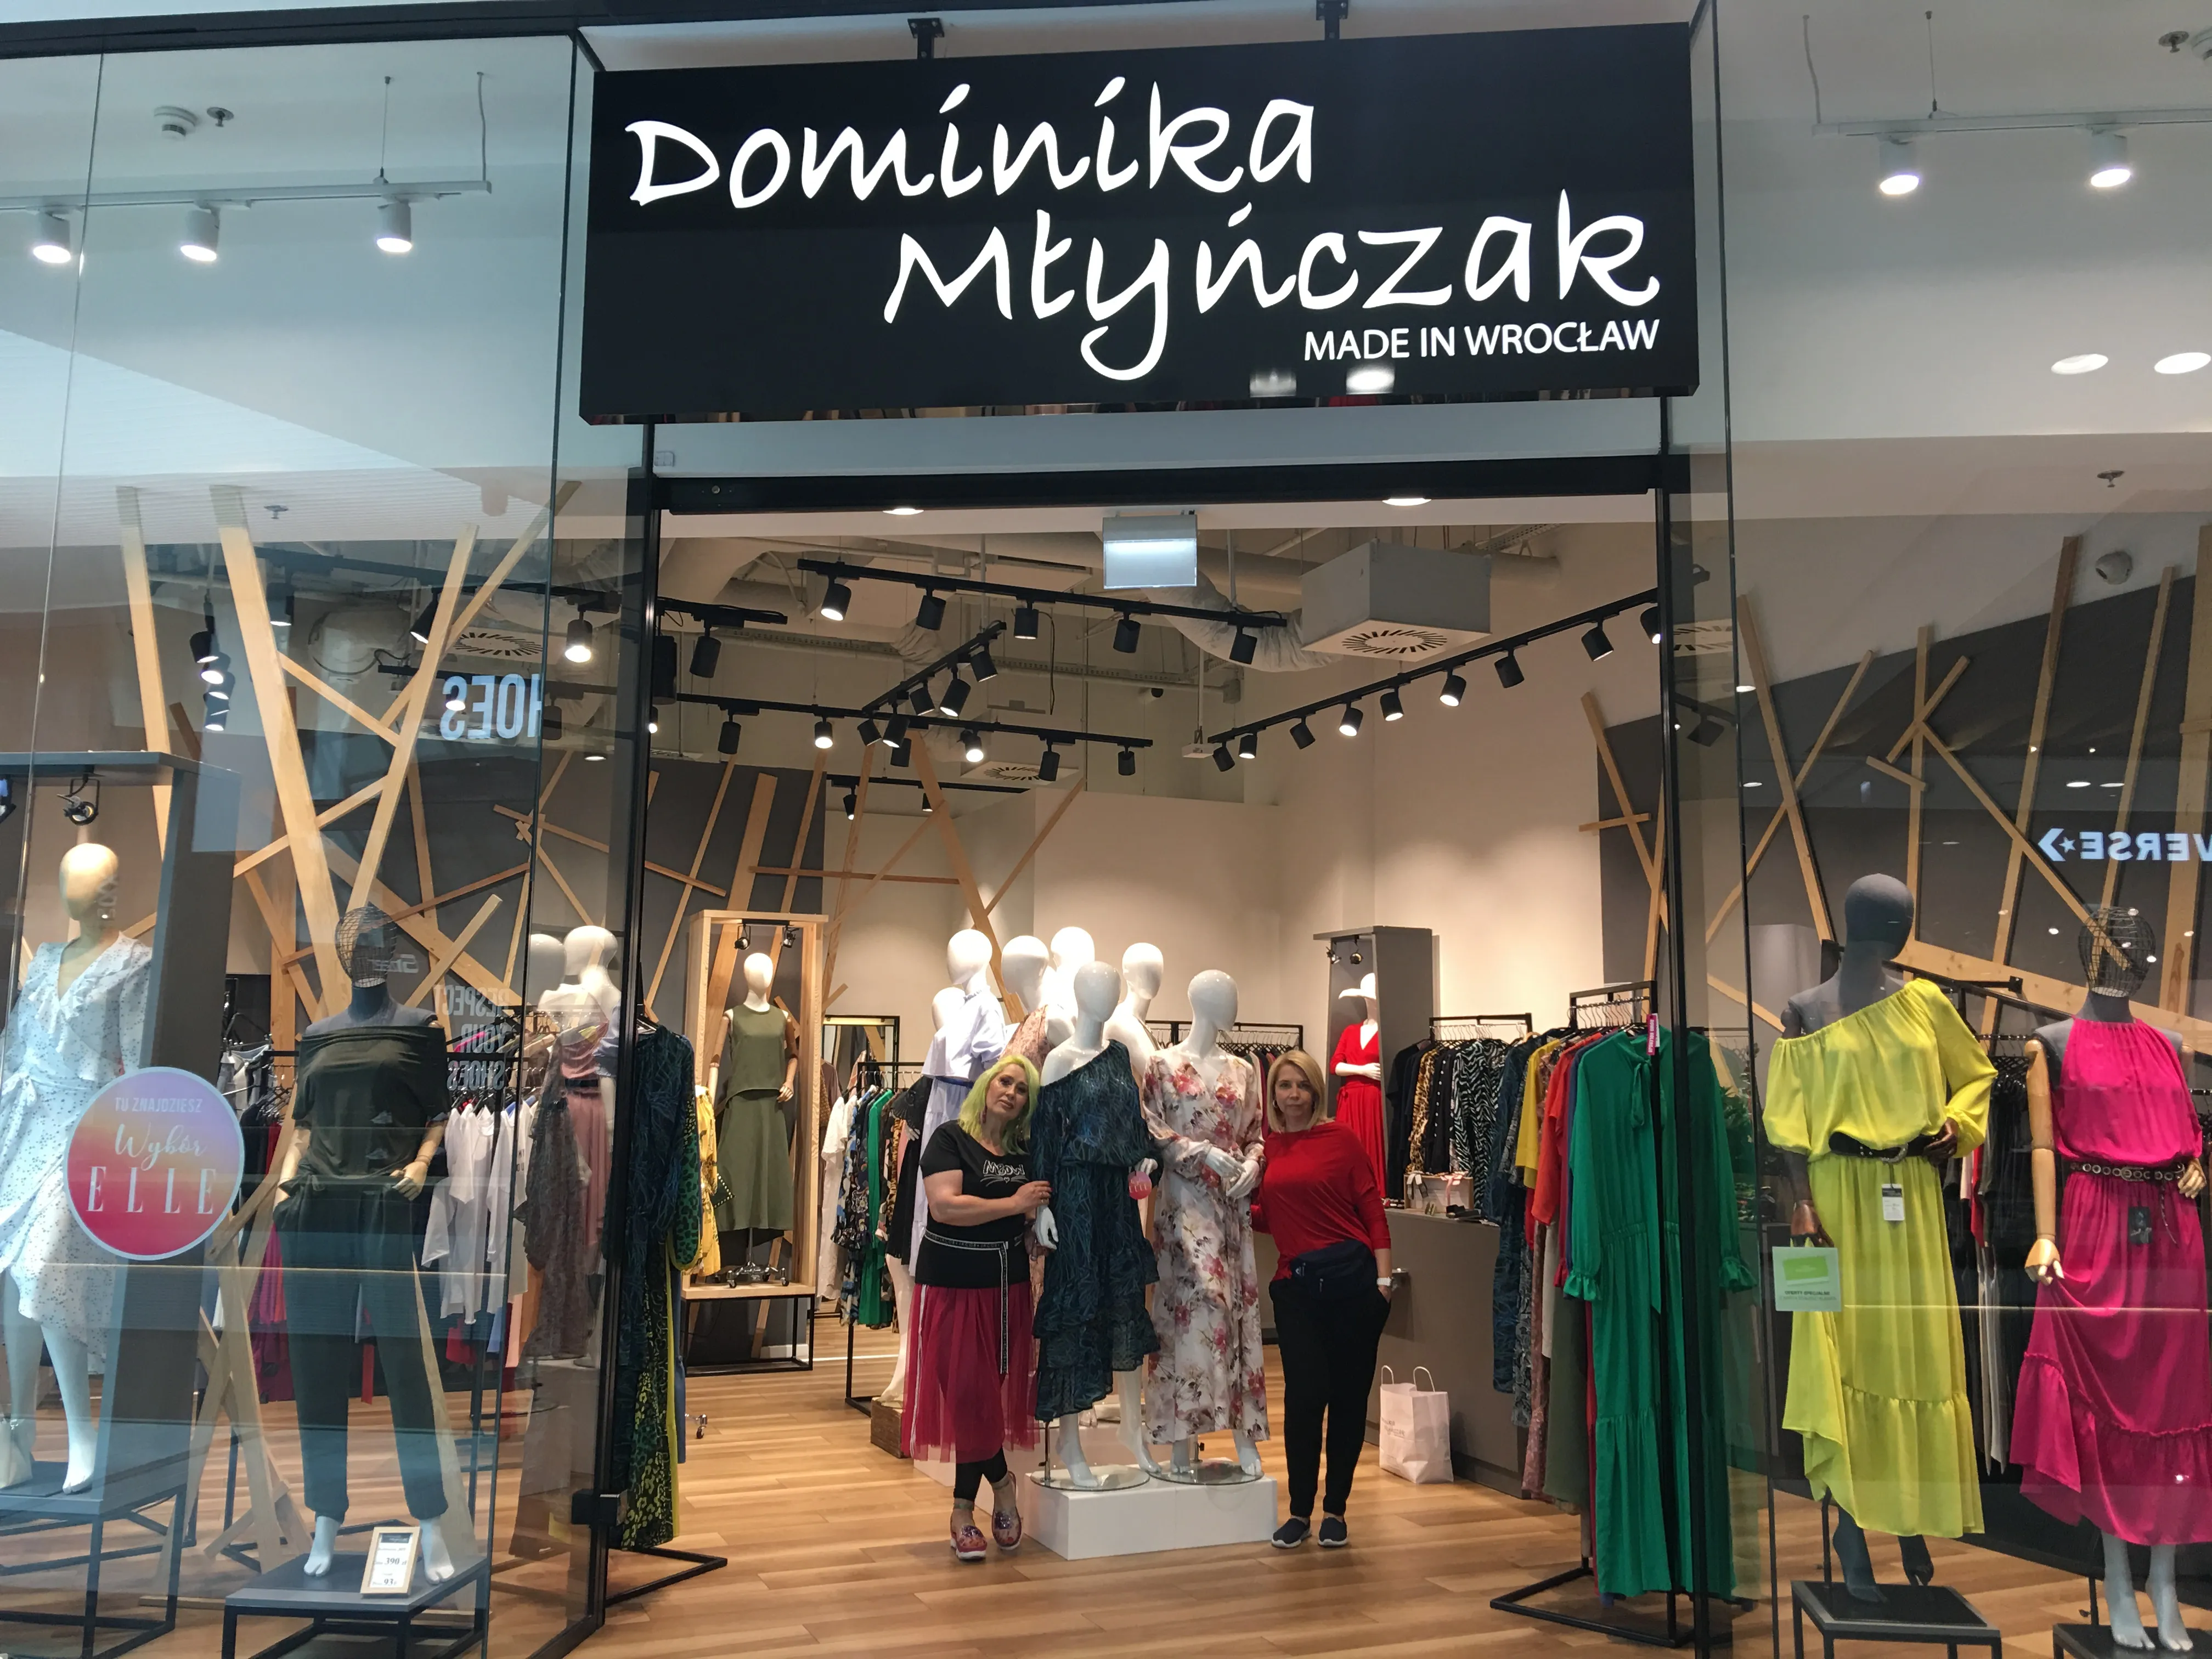 Dominika Mlynczak in Poland, europe | Clothes - Country Helper